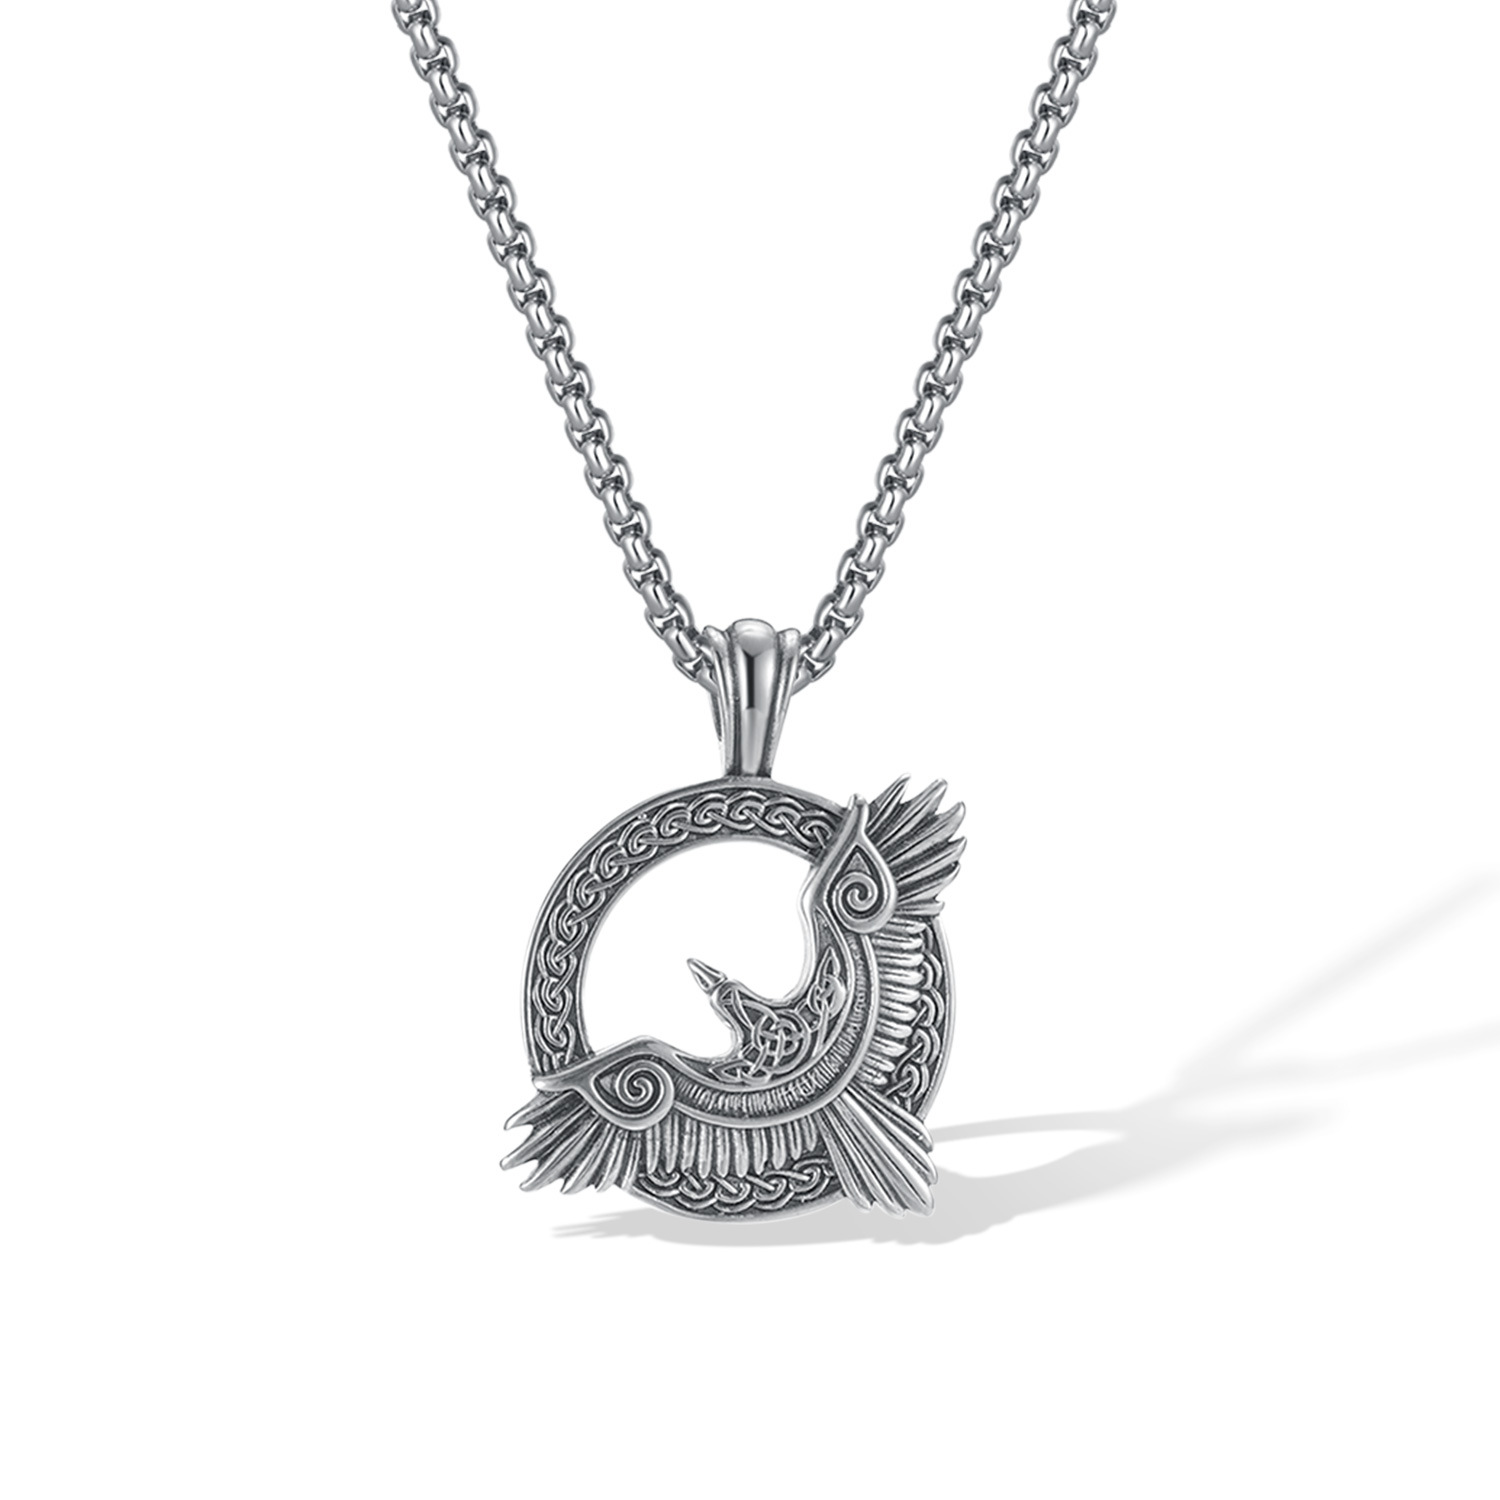 3:Steel pendant with chain 4x70cm